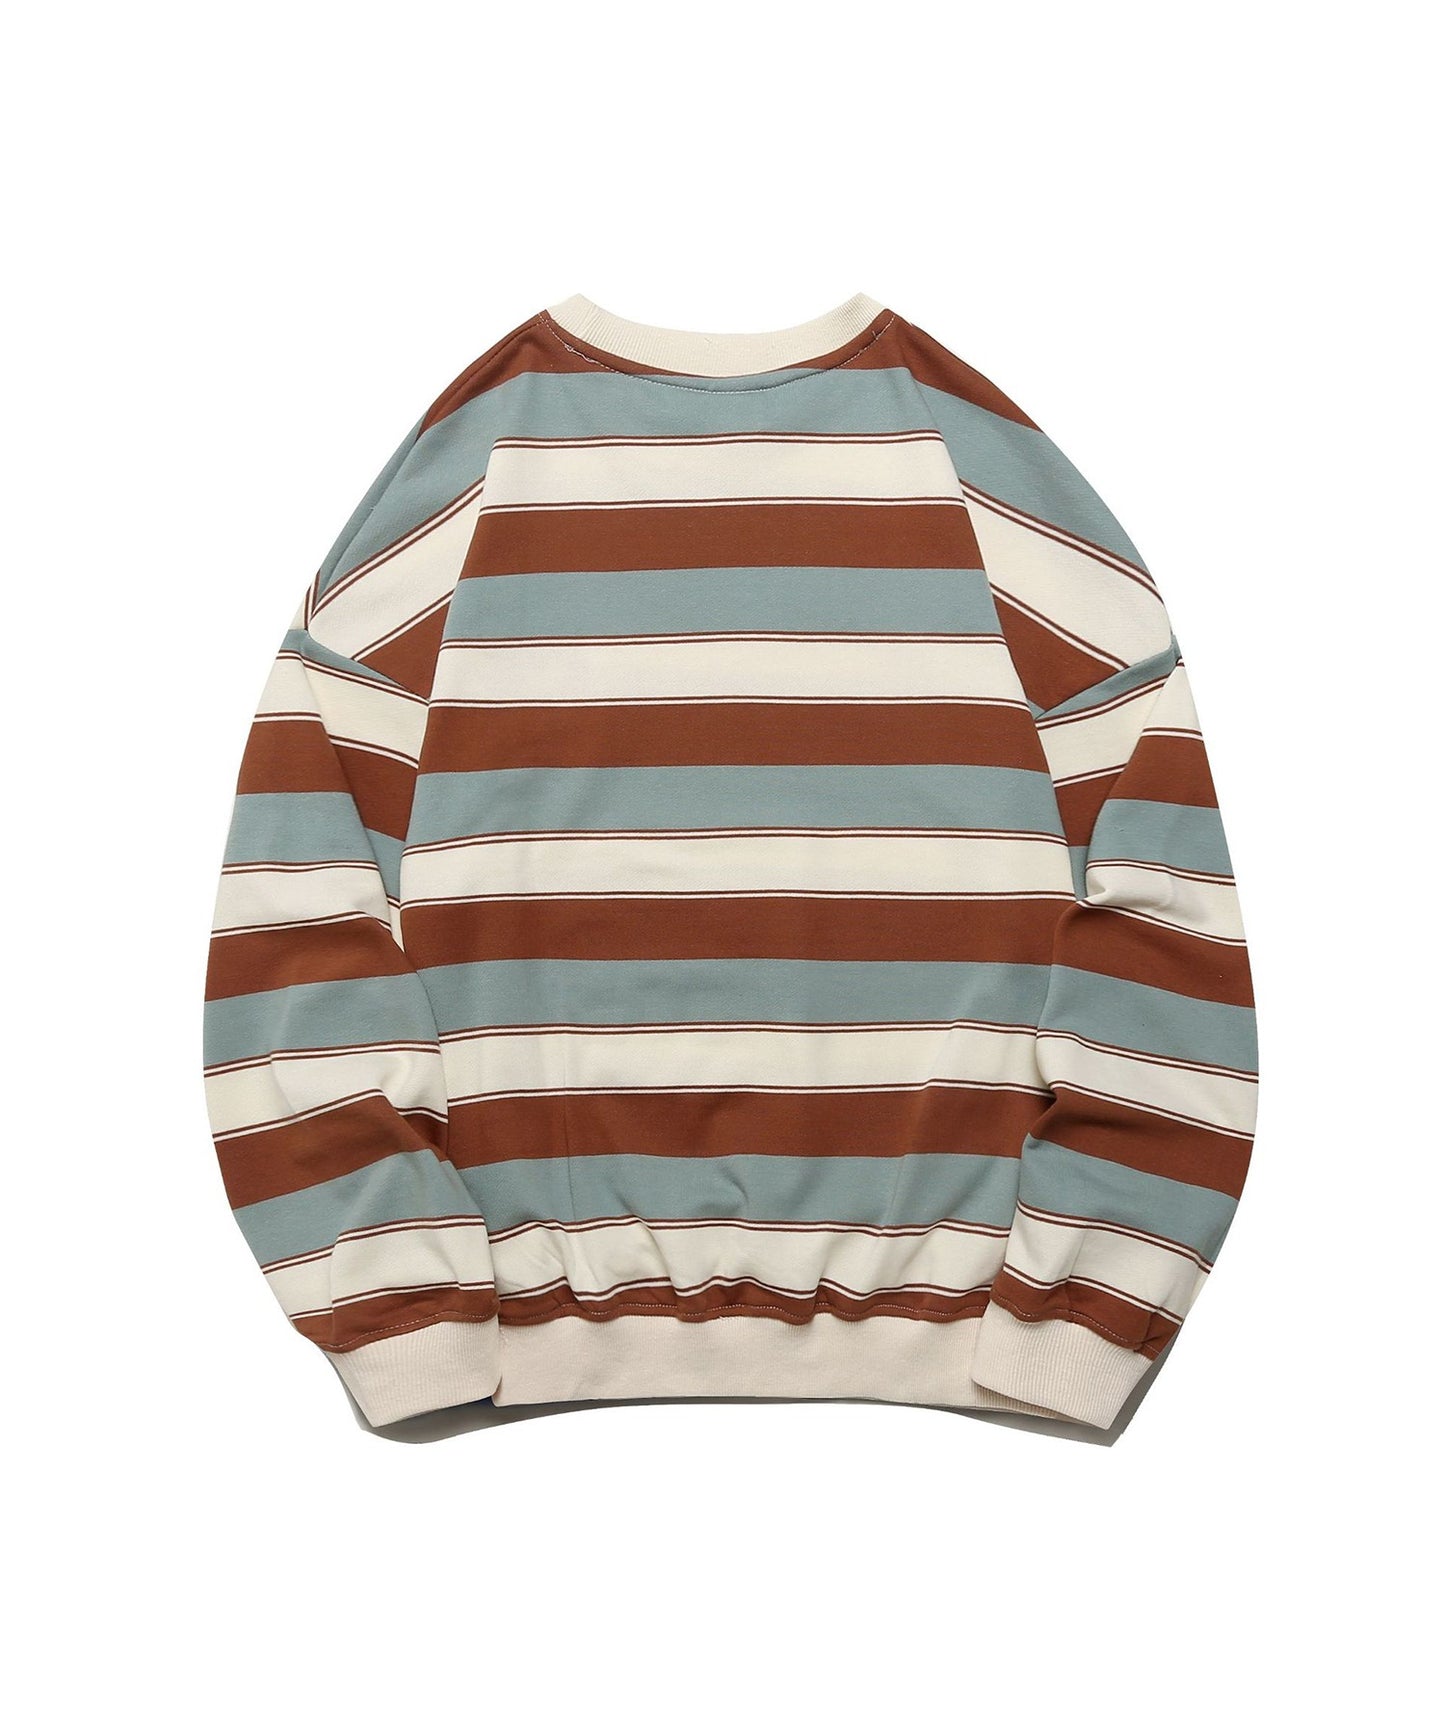 [HOOK -original-] Multi-border sweatshirt with retro style hook embroidery